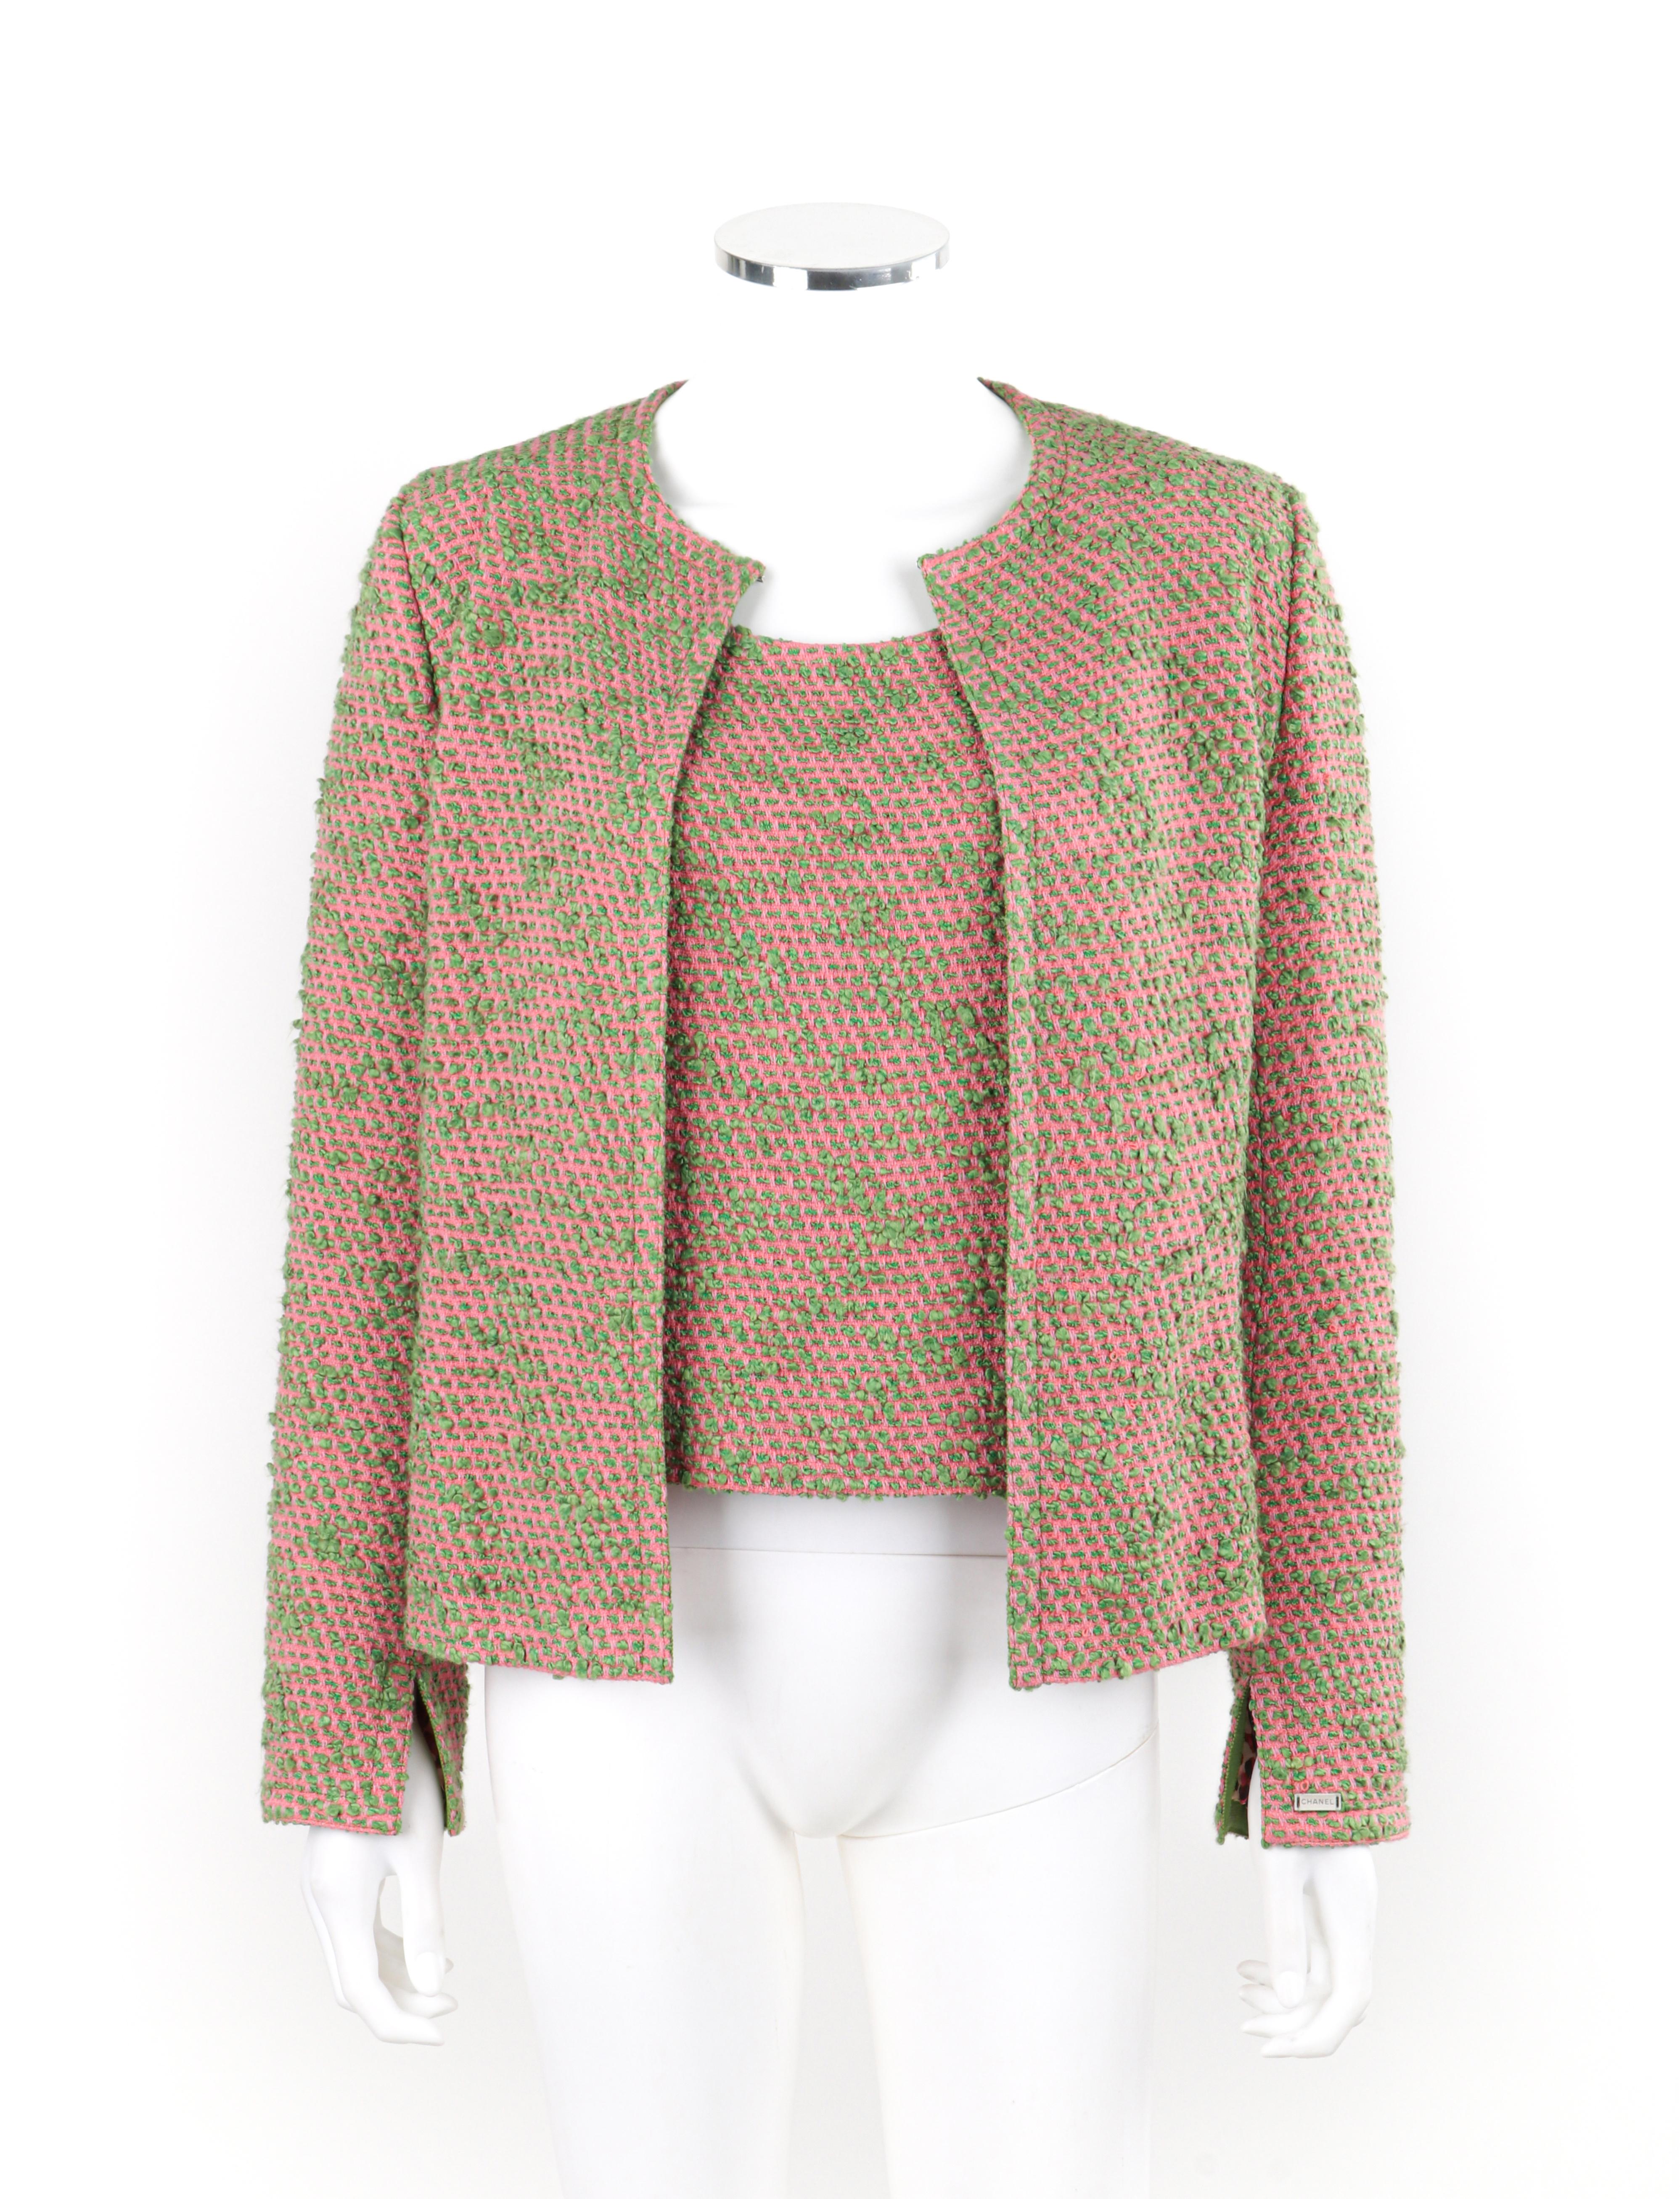 Marron CHANEL c.2000s Pink Green Boucle Knit Silk Jacket & Tank Top Shell 2pc Size 42 en vente